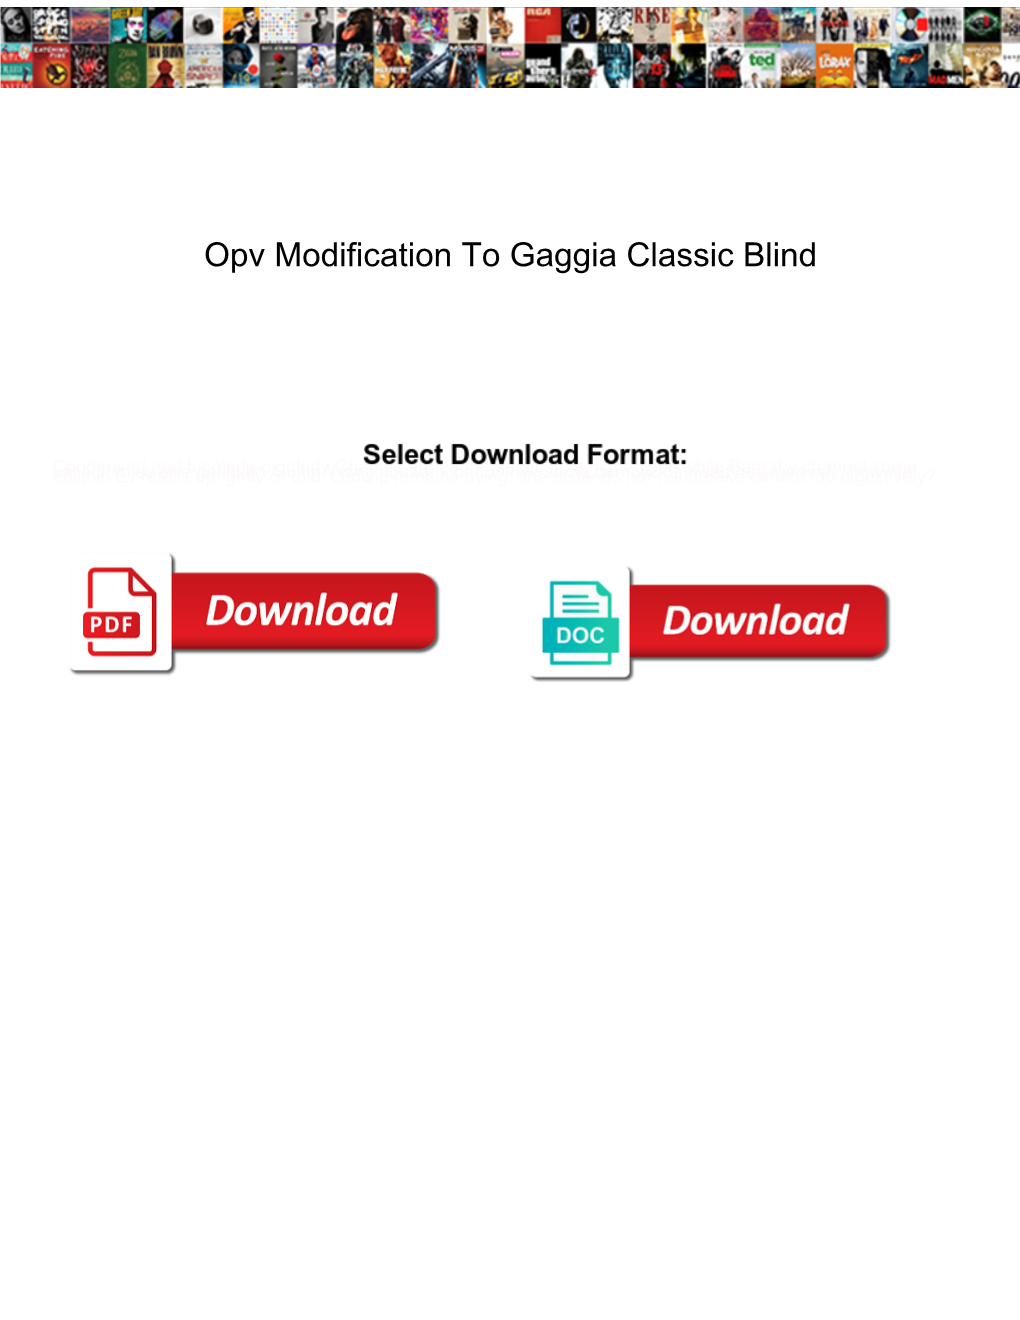 Opv Modification to Gaggia Classic Blind